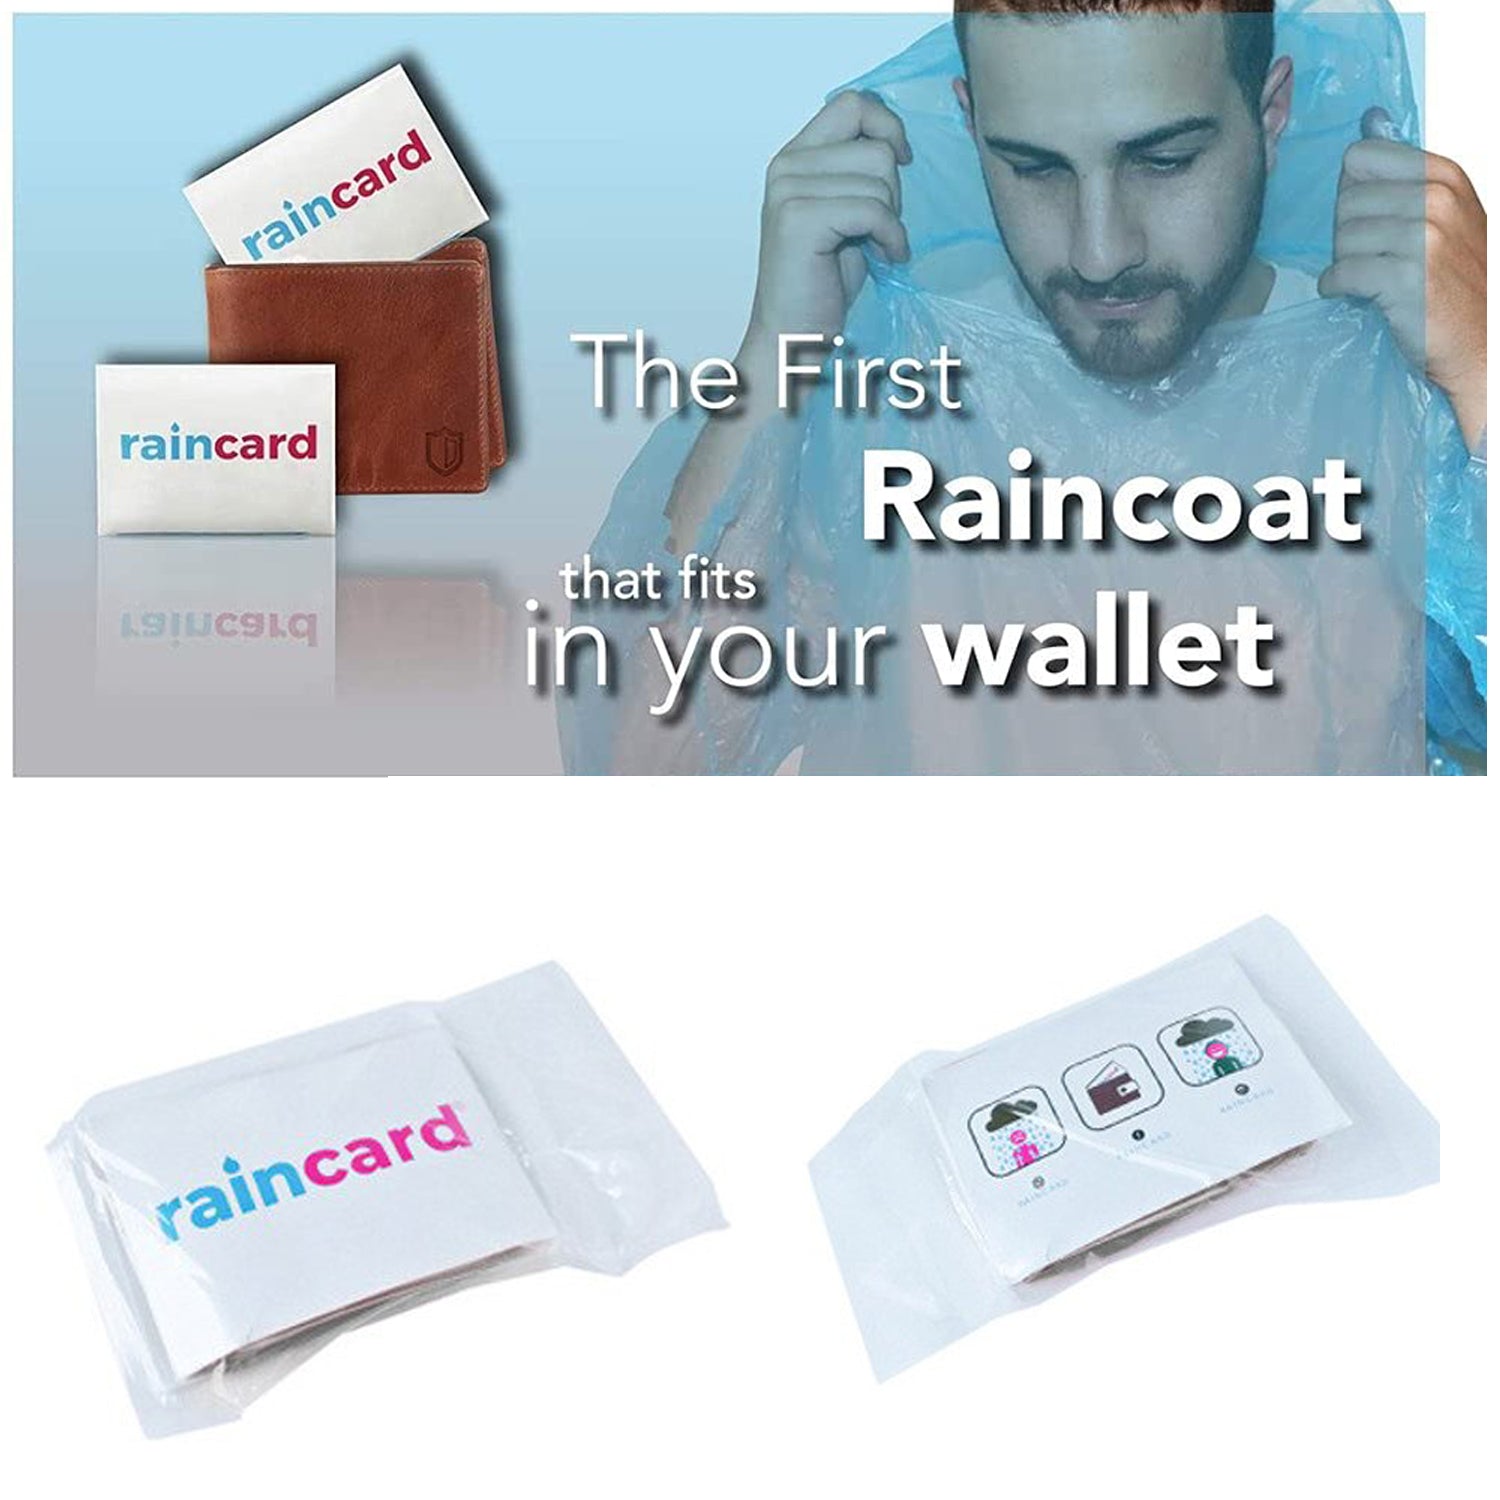 1425A Easy to Carry Emergency Waterproof Rain coat pouch 